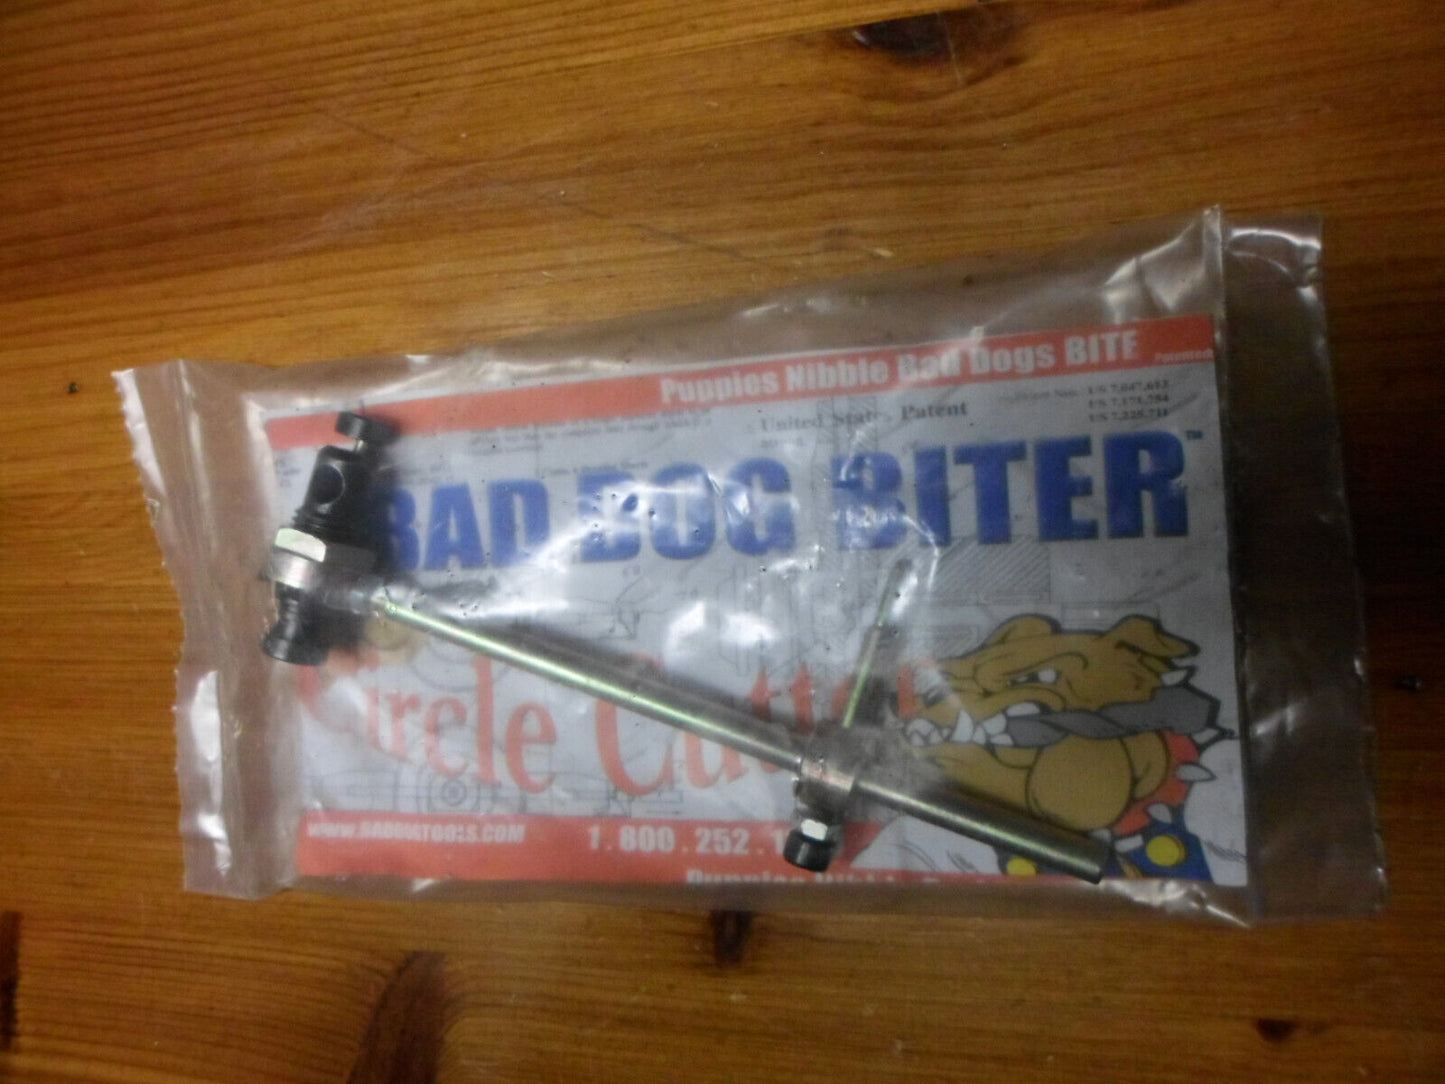 Bad Dog Biter Circle Cutter